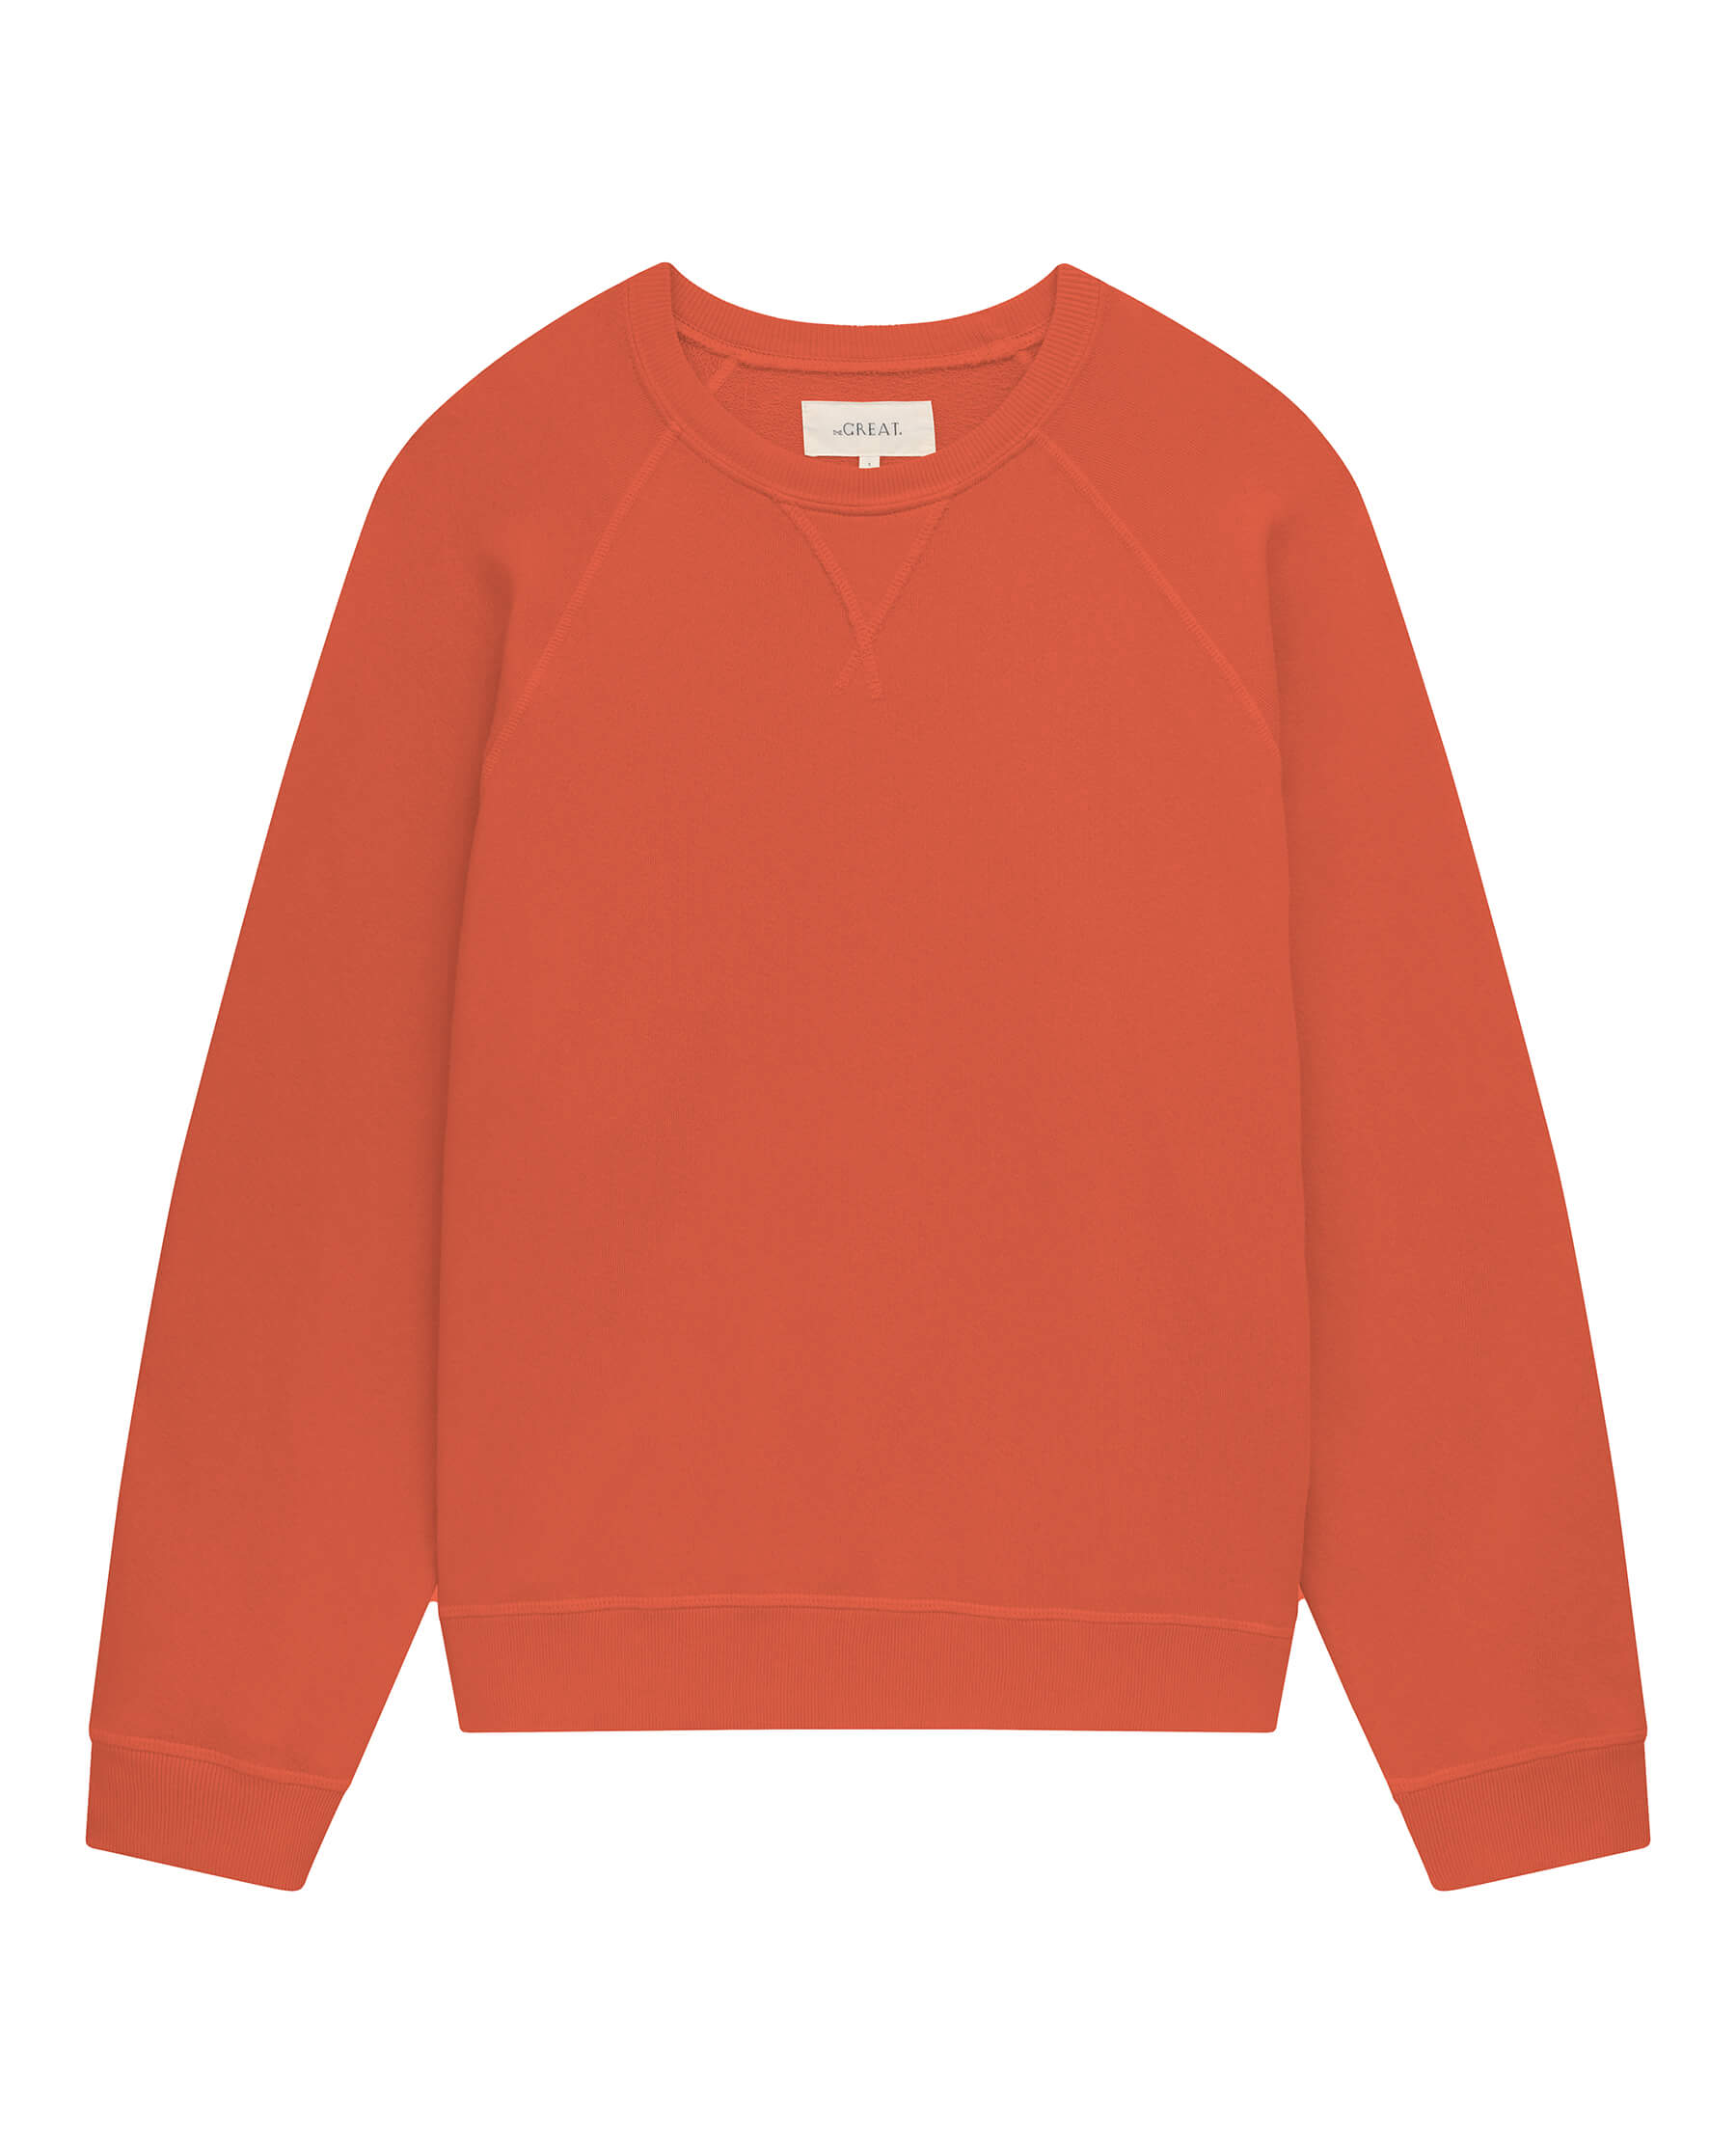 The Slouch Sweatshirt. Solid -- Heirloom Tomato